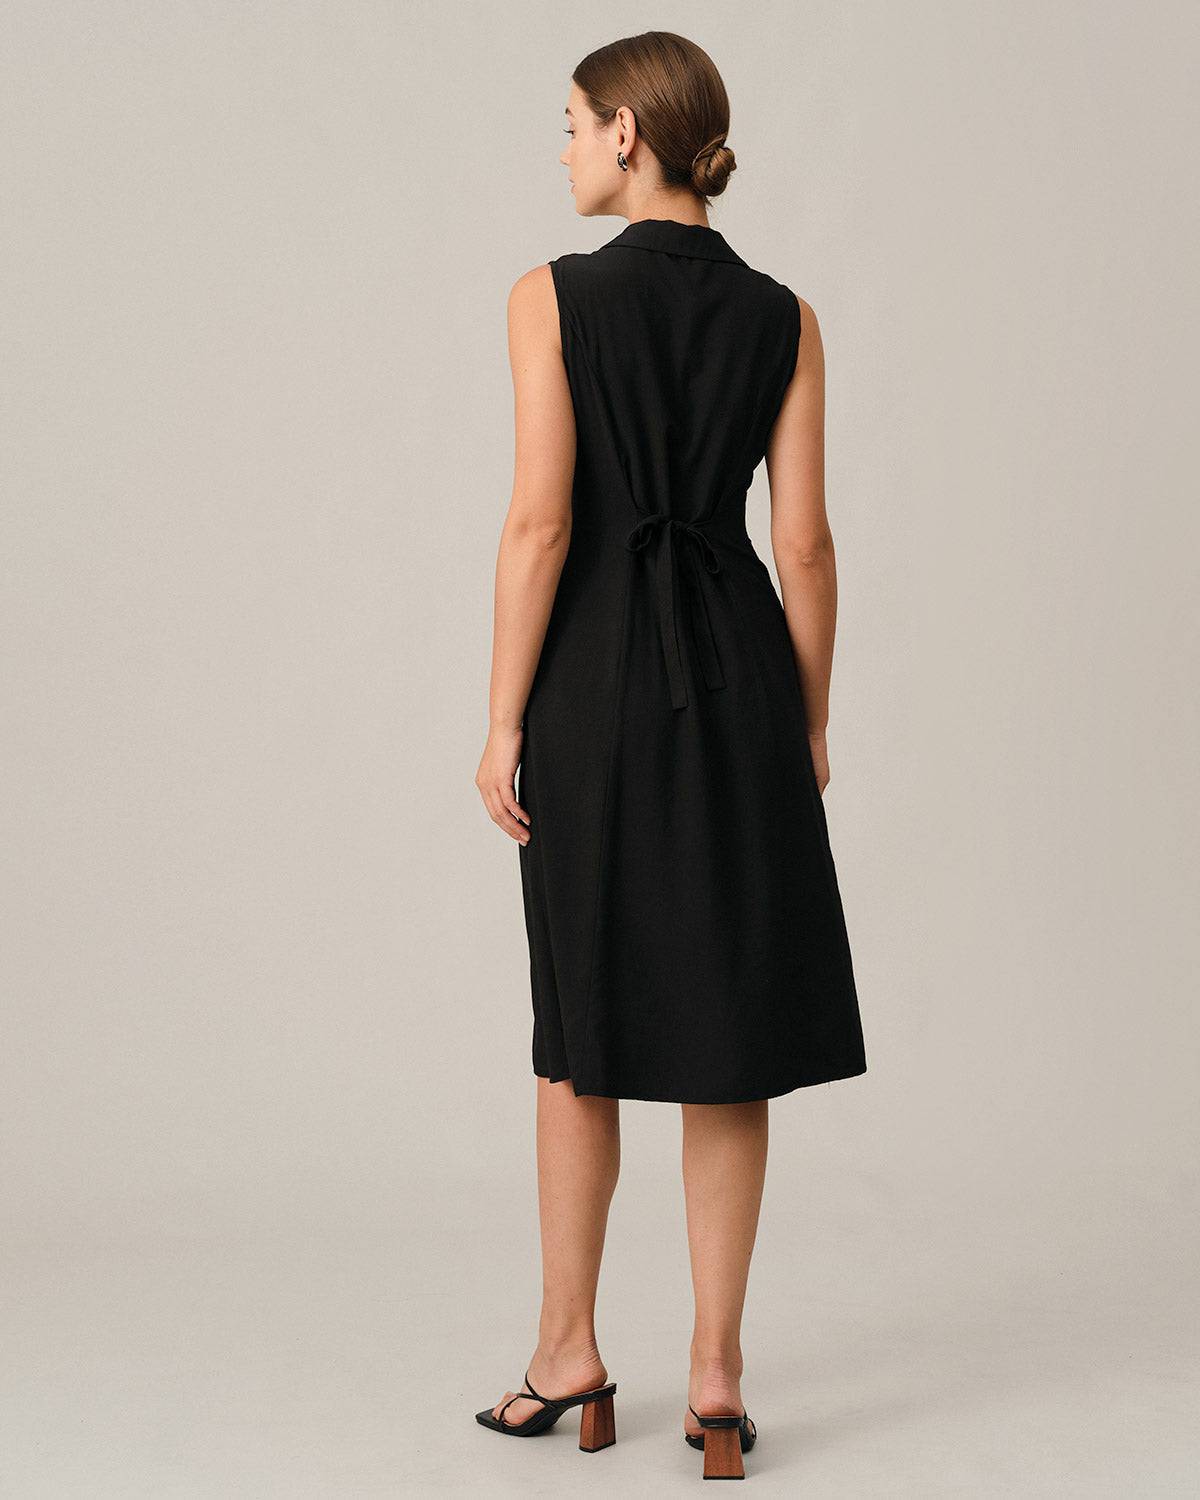 Solid Black Dress - The Black Dresses RIHOAS Midi - Dress V Neck V-Neck - Sleeveless Midi | Tunic Black